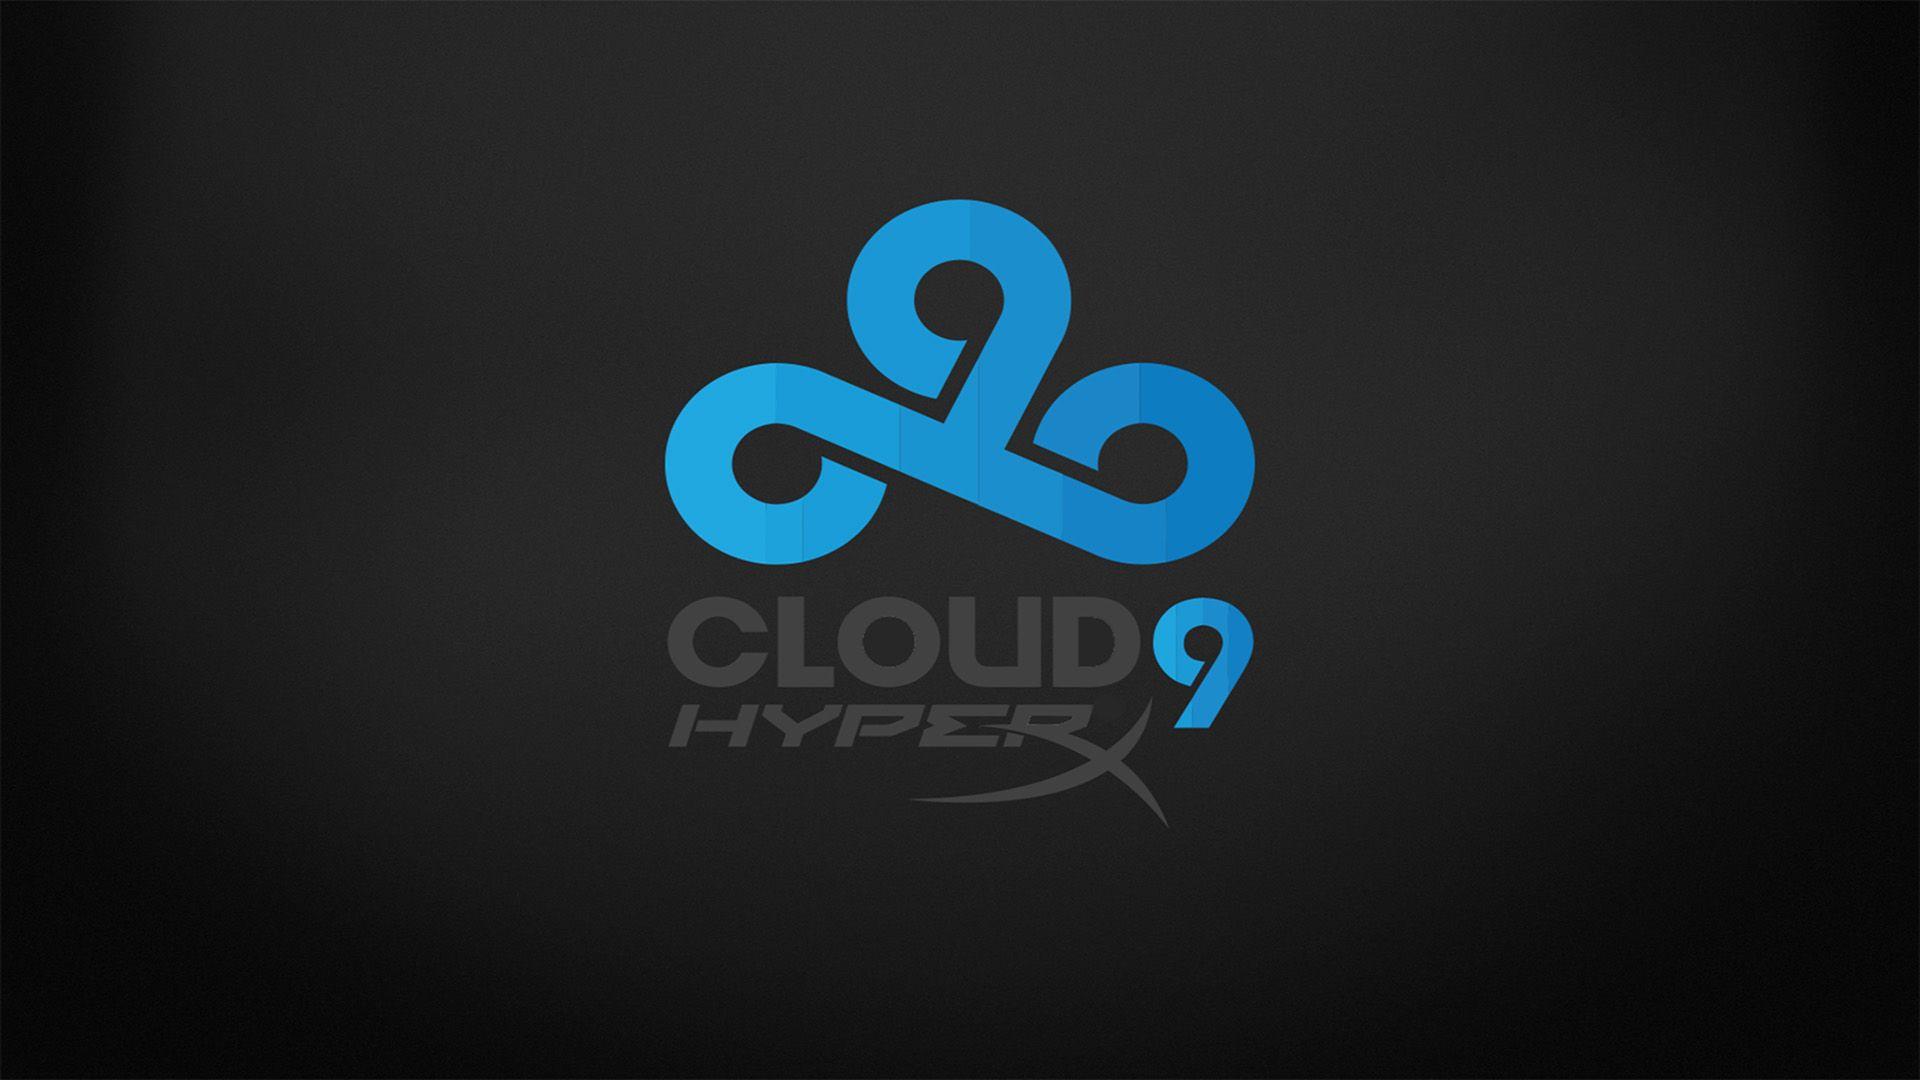 Cloud9 Wallpaper